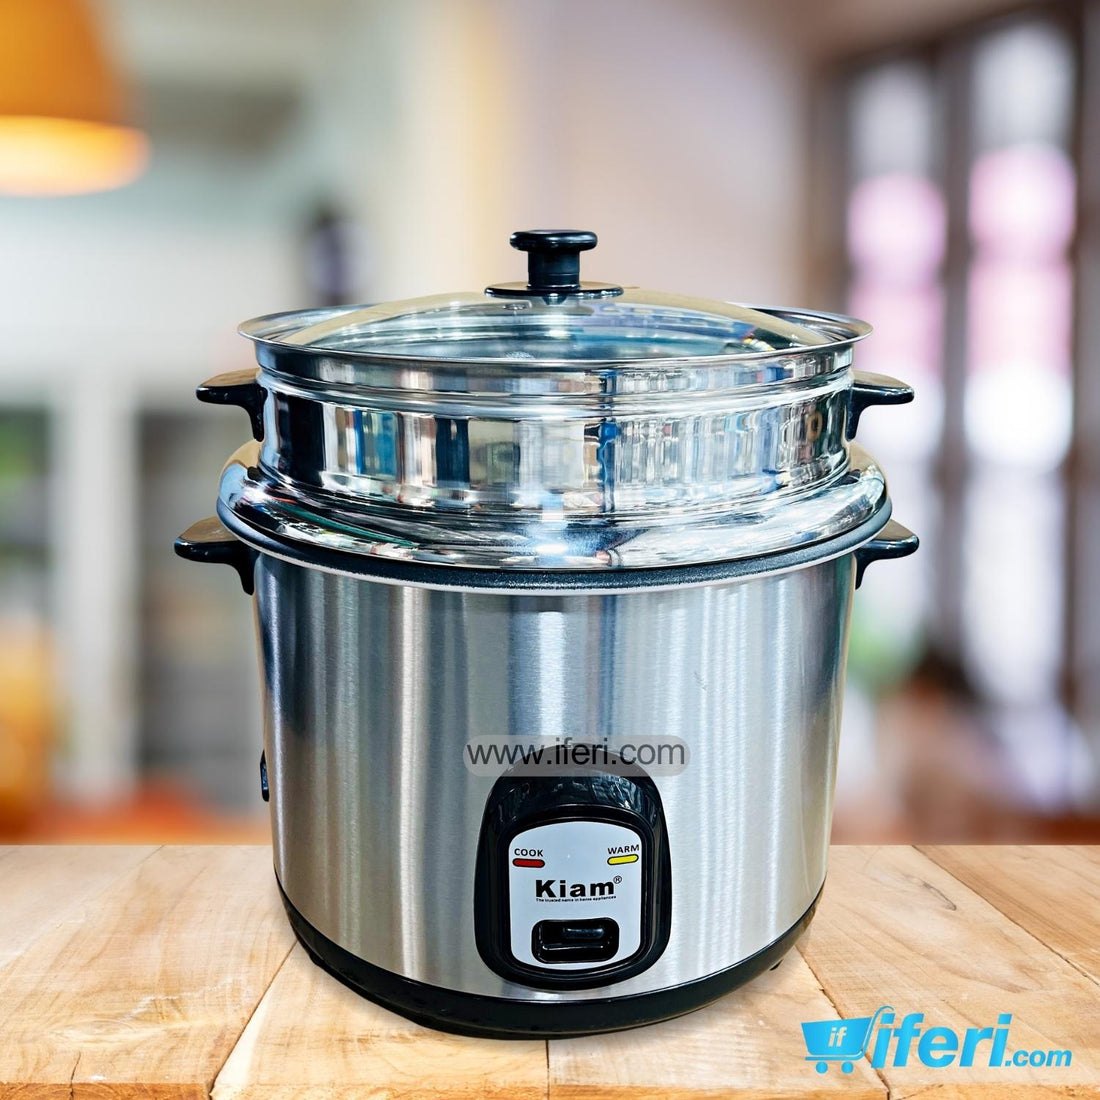 Kiam 2.8 LTR 1000-WATT Double Pot Electric Rice Cooker UT8704